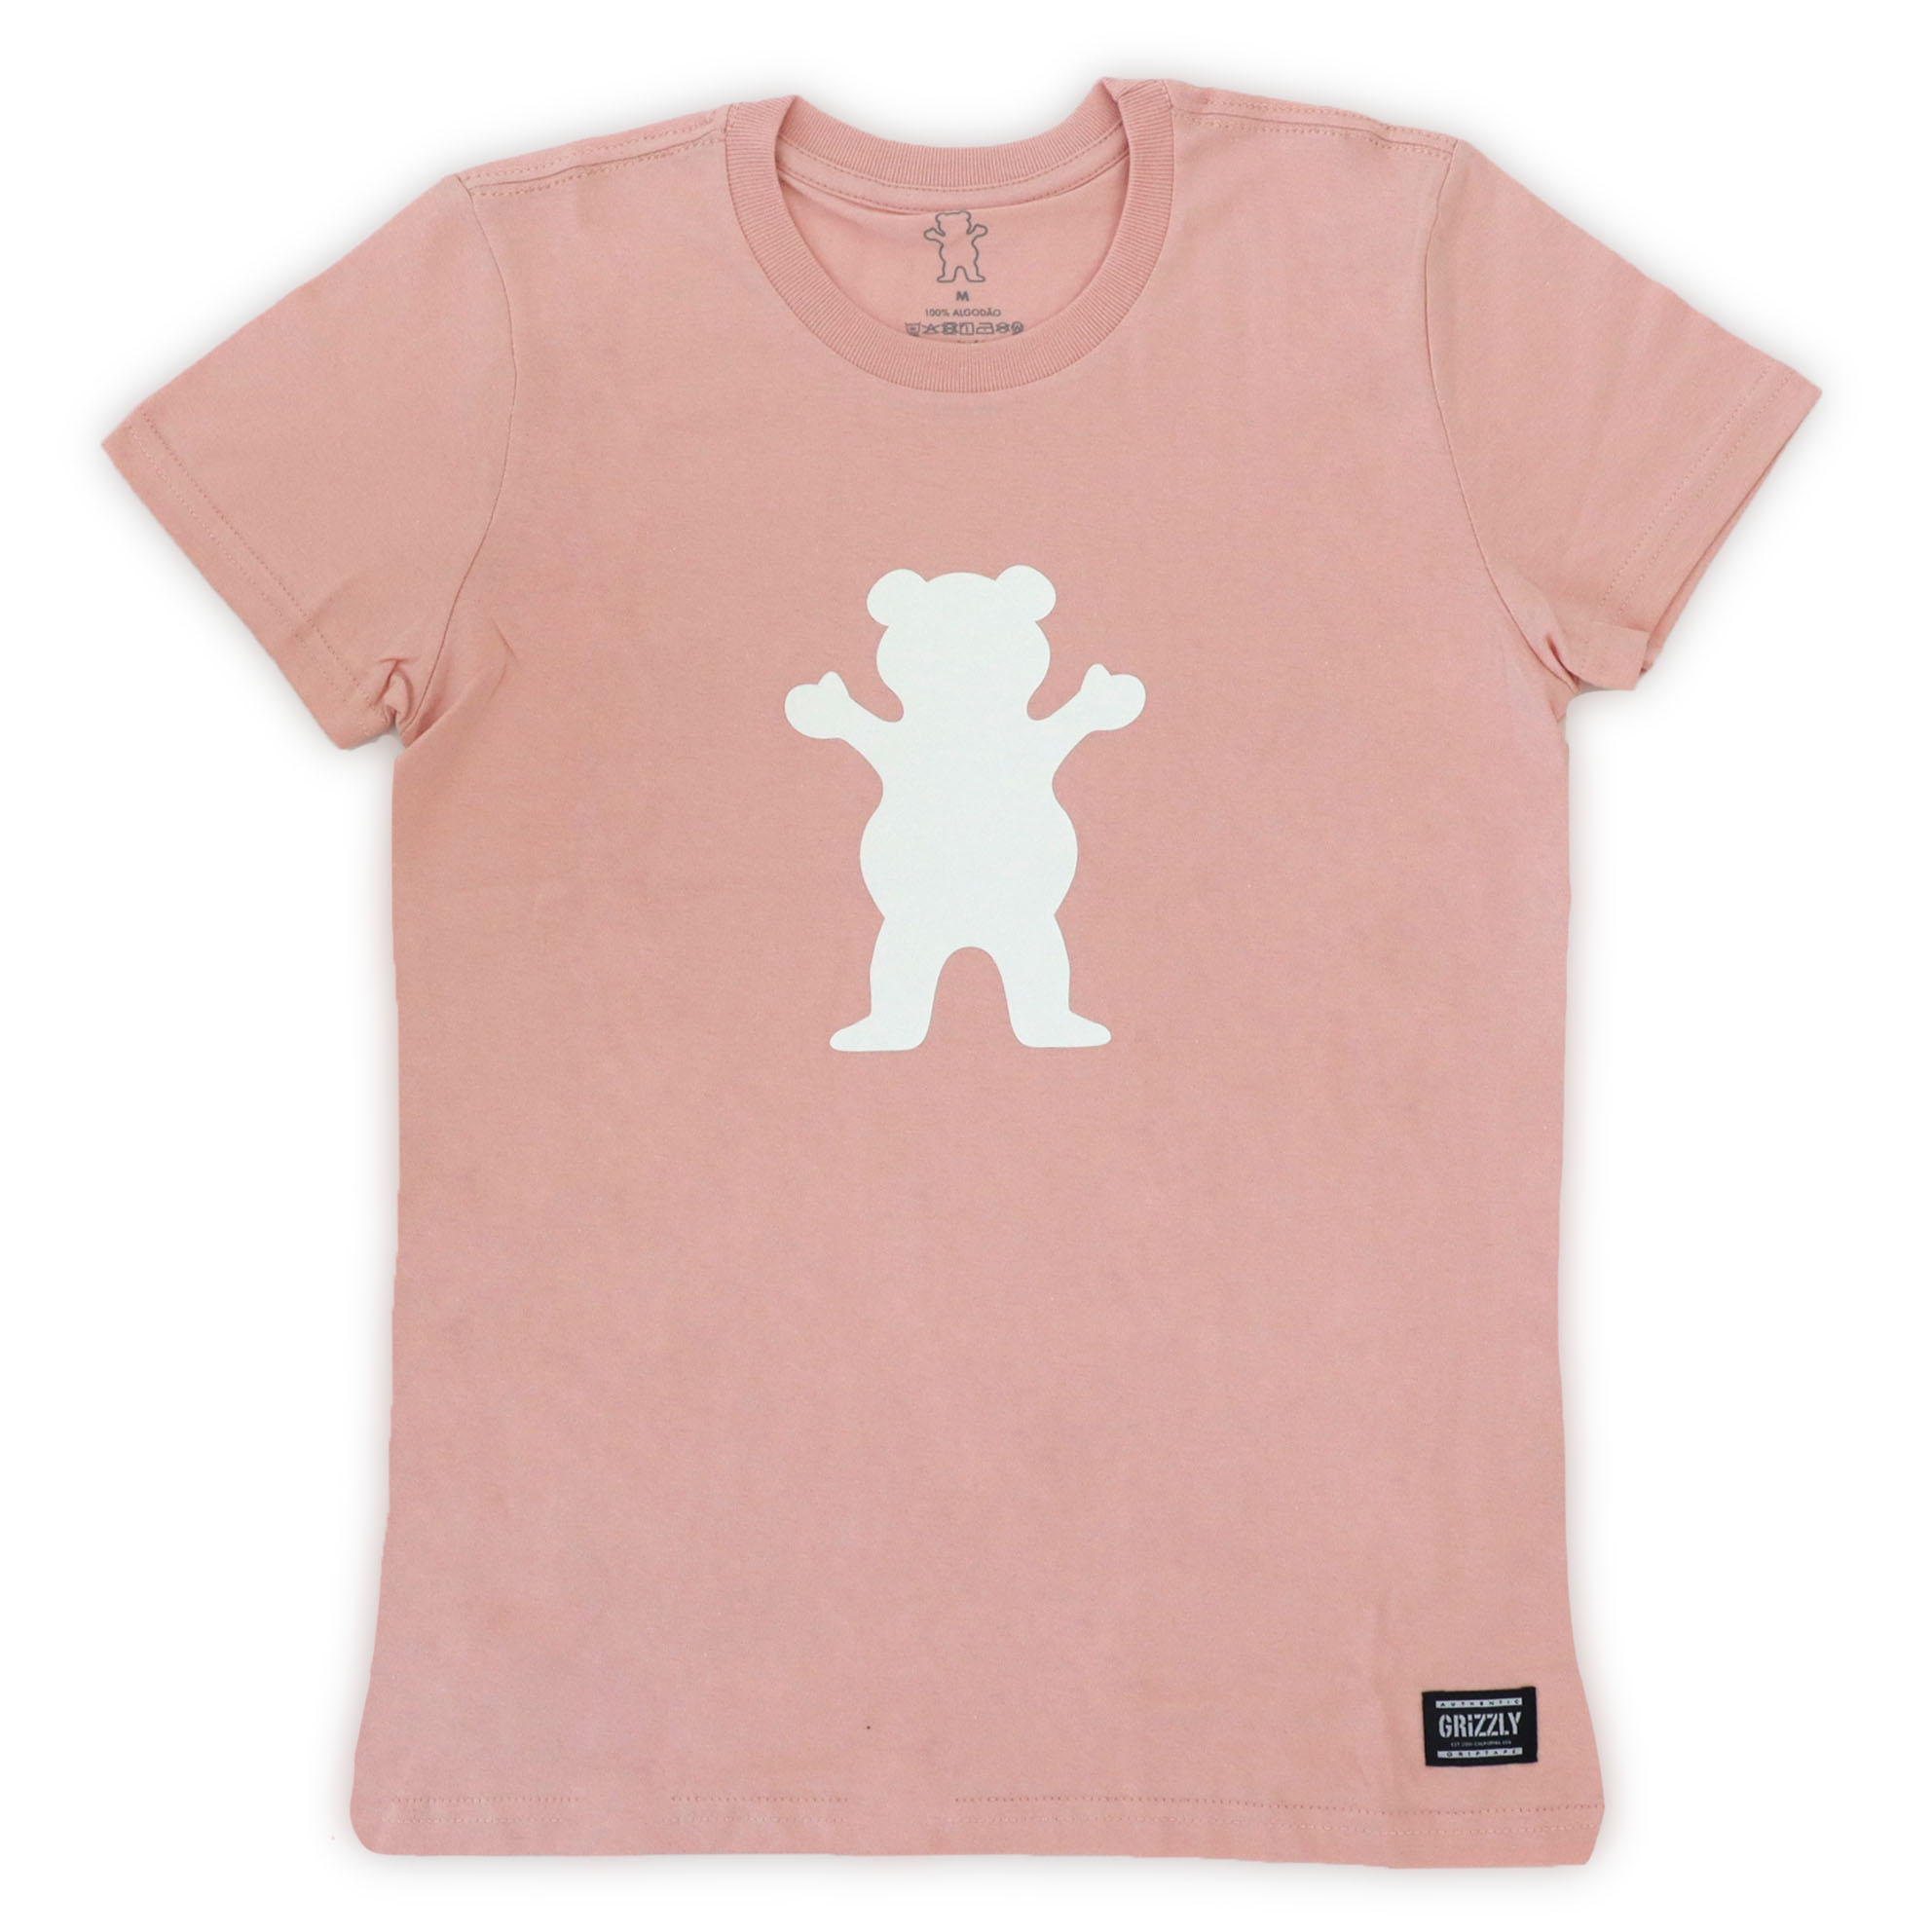 Camiseta Feminina Grizzly Og Bear - Rosa/Branco